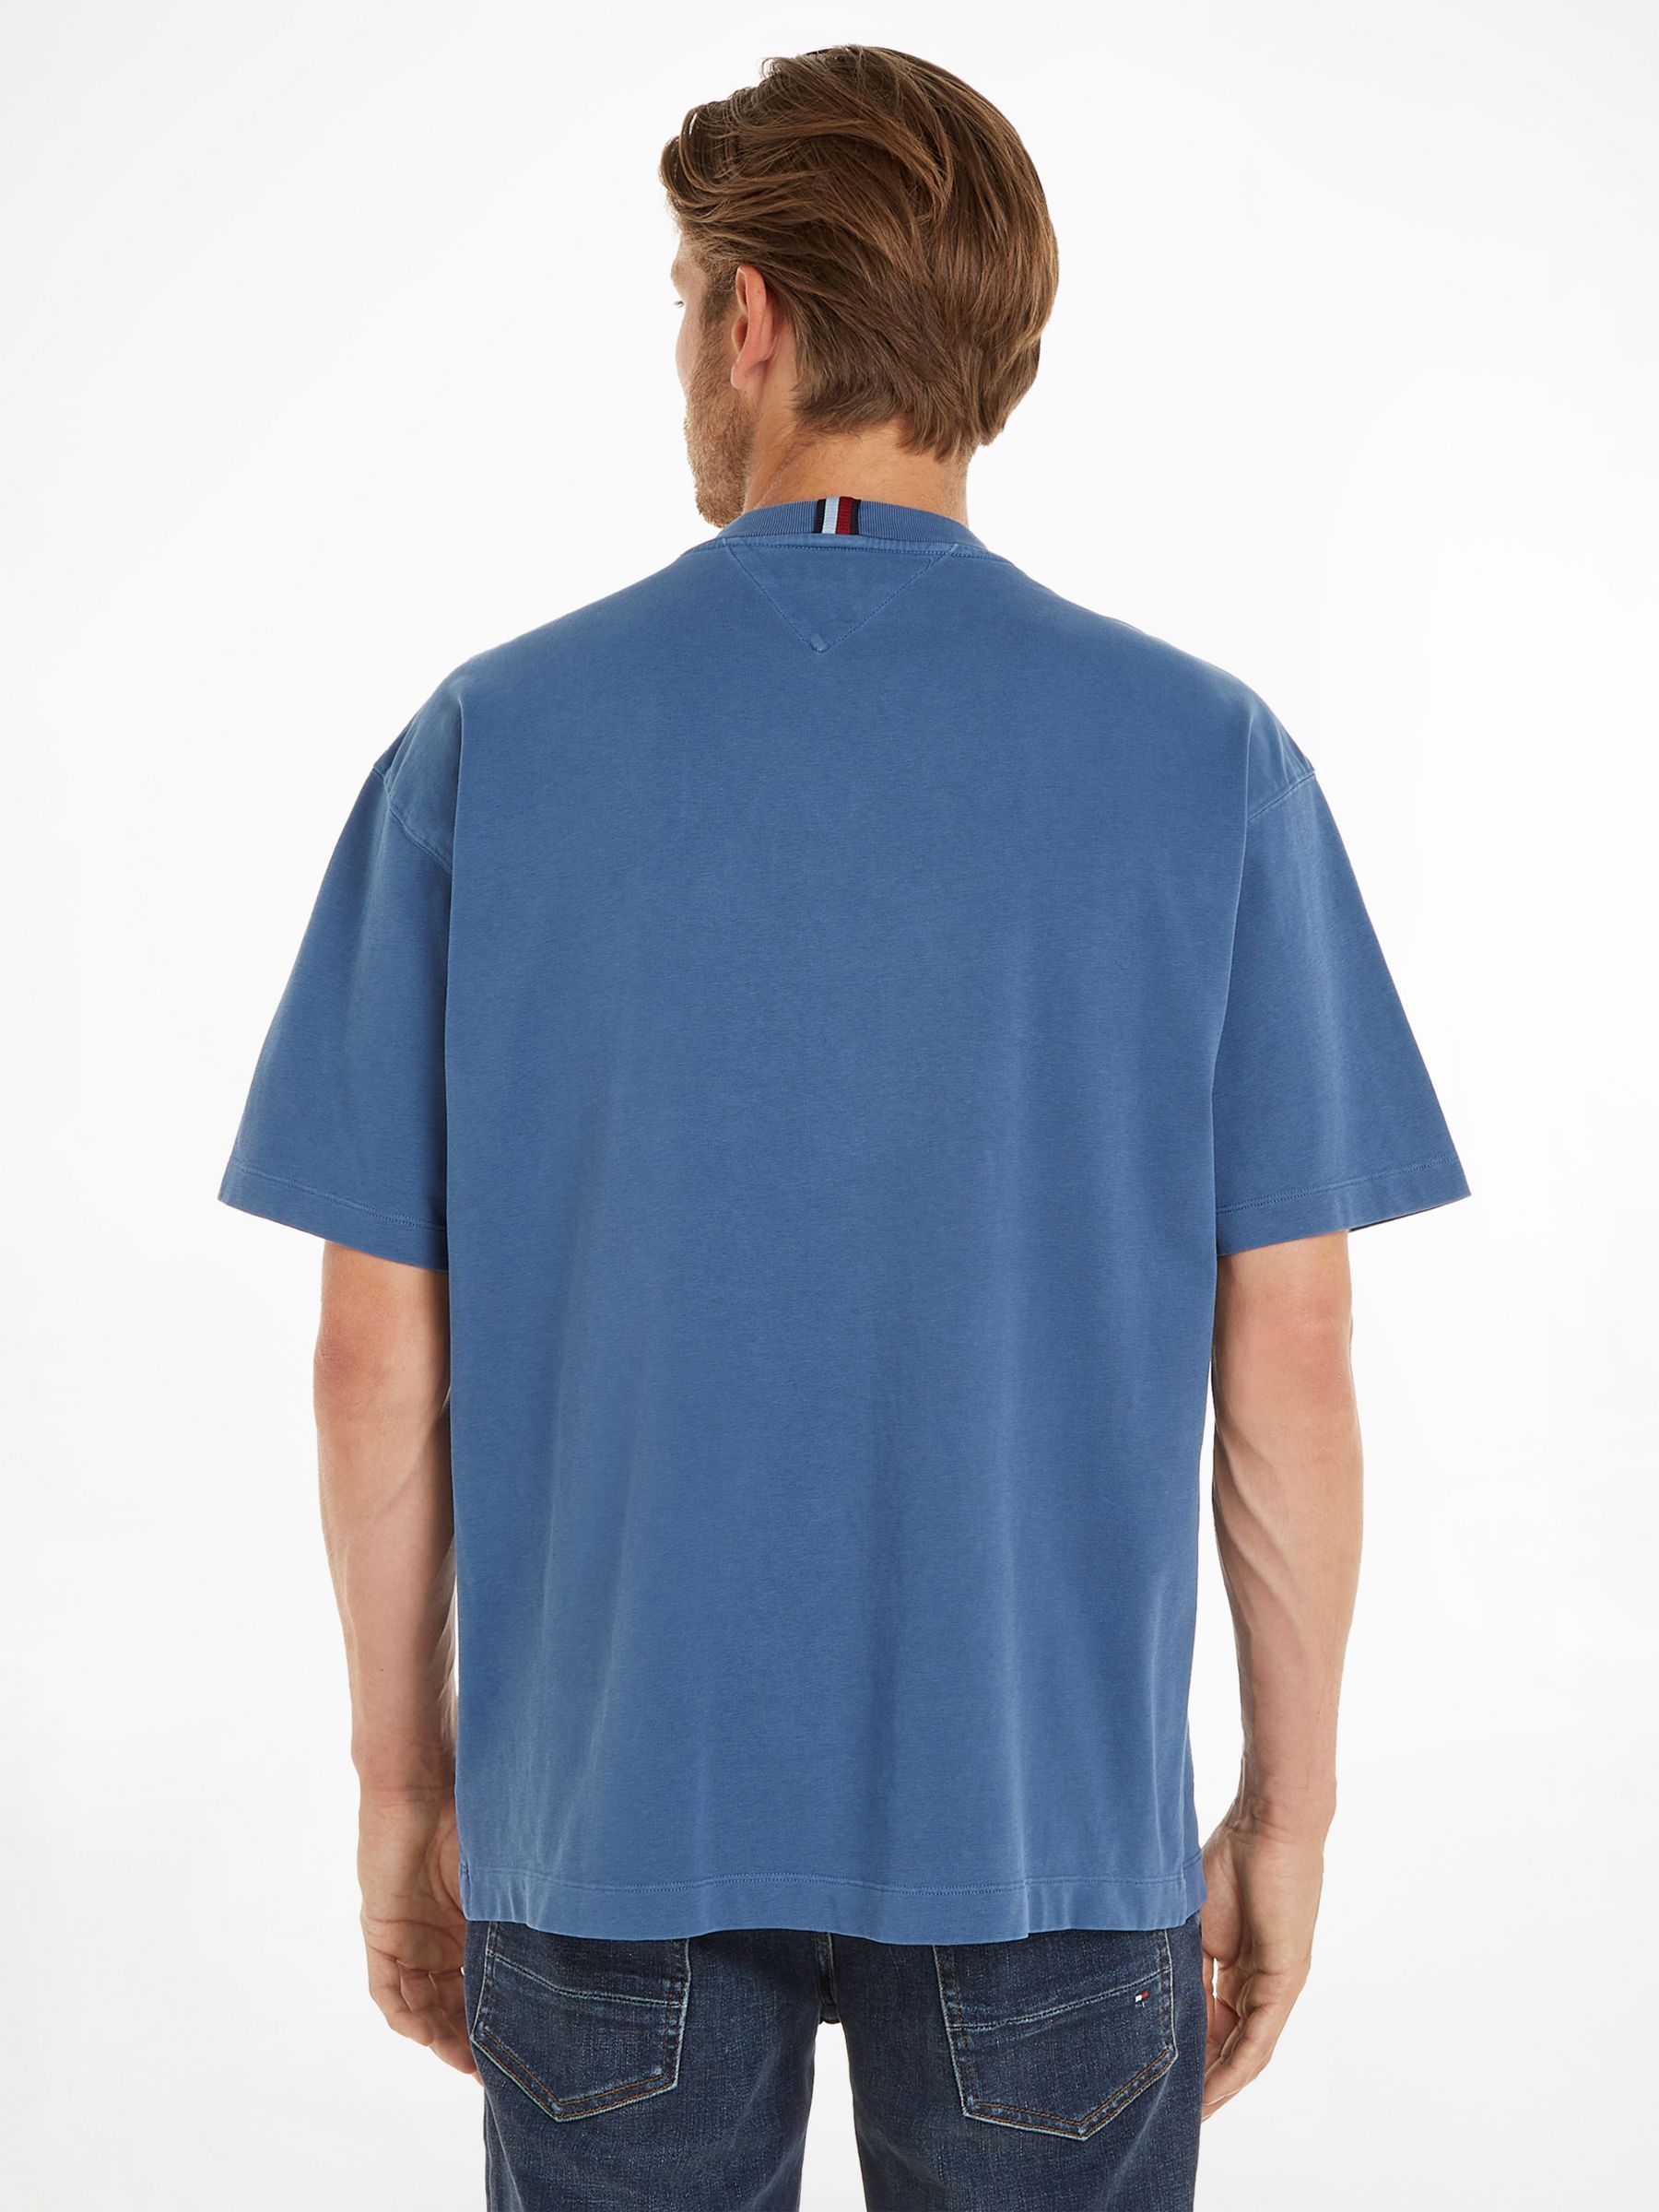 Tommy Hilfiger Garment Dyed T-Shirt, Blue Coast, S